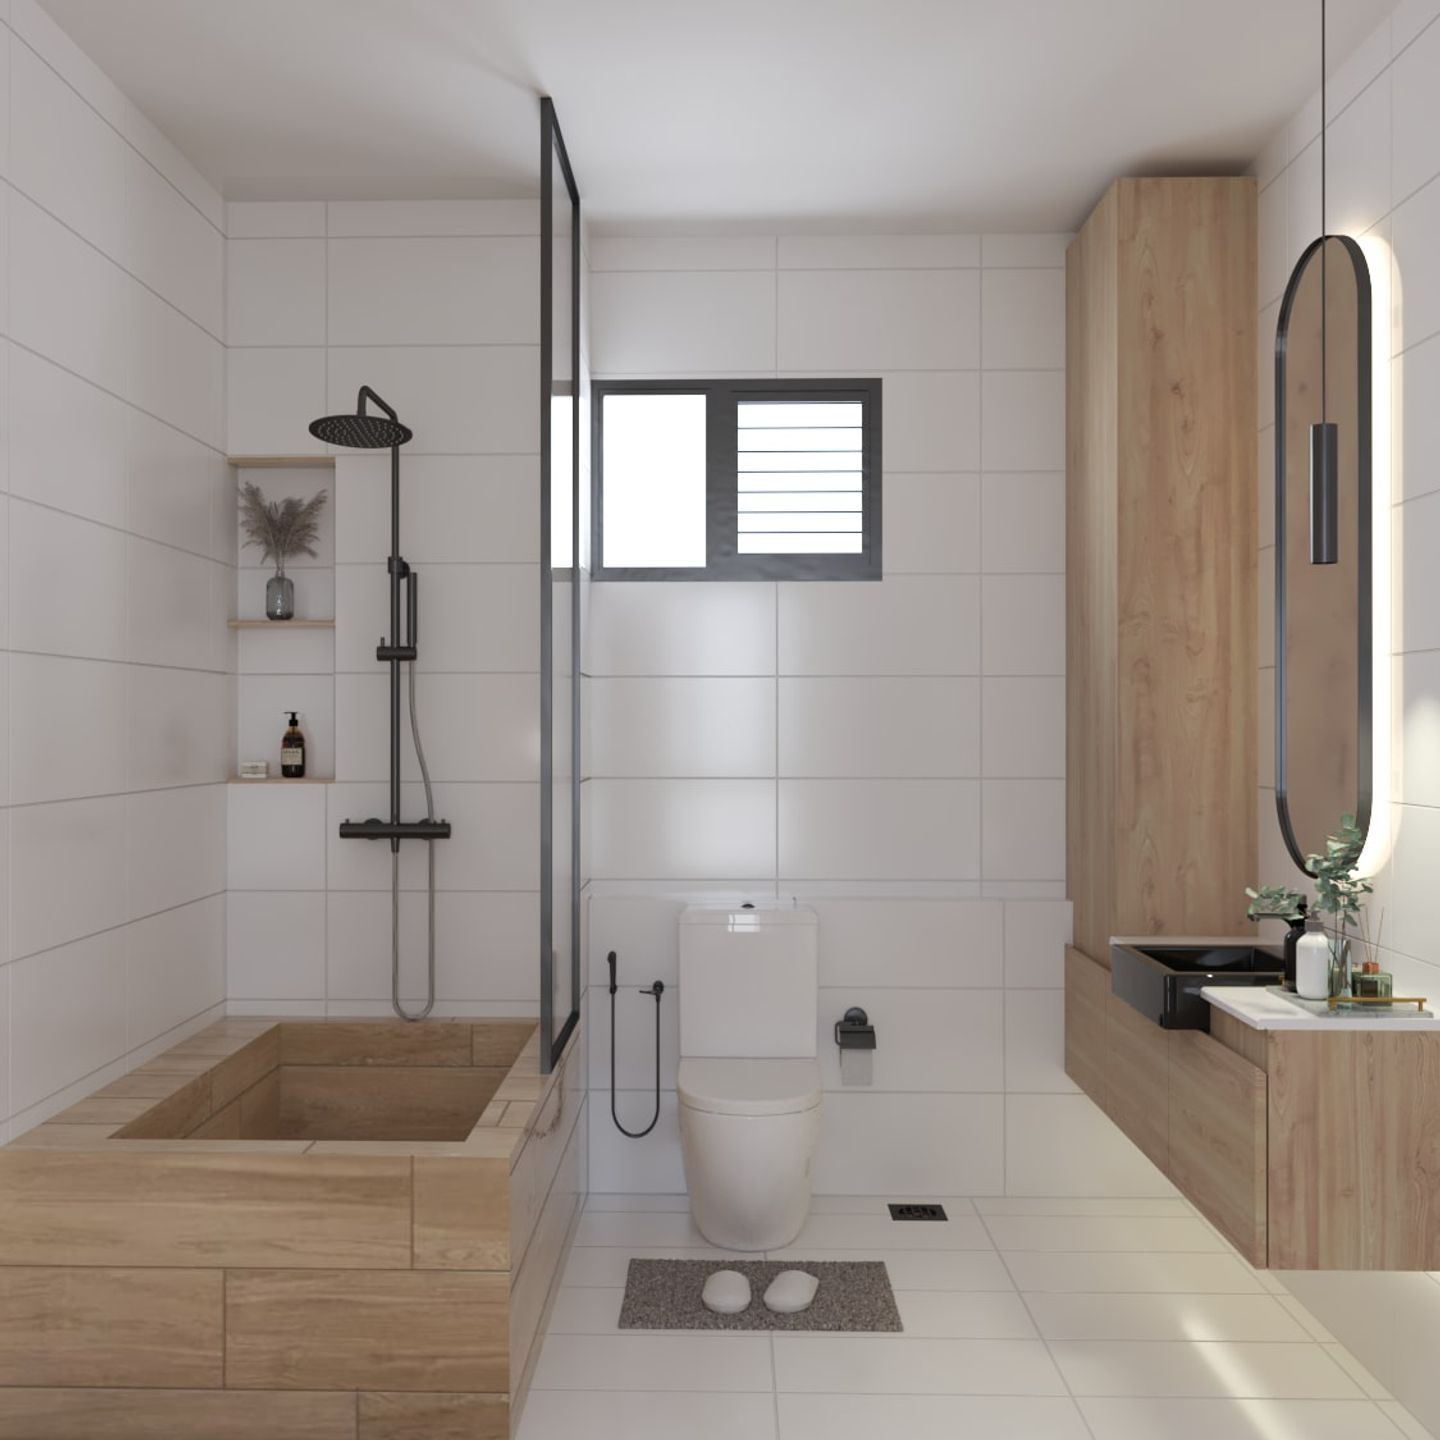 Modern White Bathroom Design With A Bathtub - Livspace